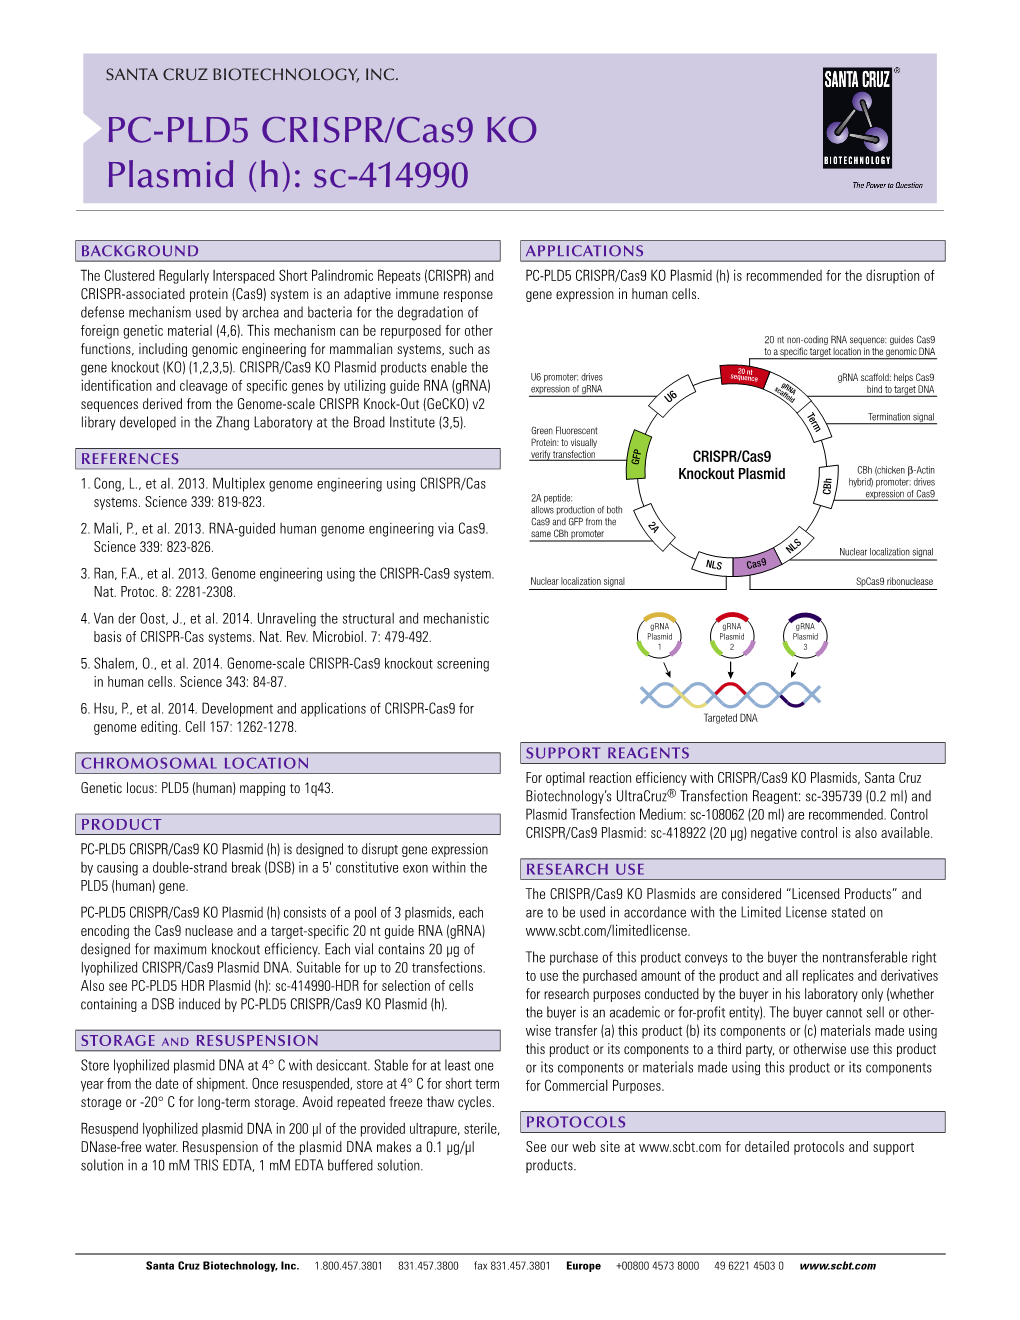 PC-PLD5 CRISPR/Cas9 KO Plasmid (H): Sc-414990